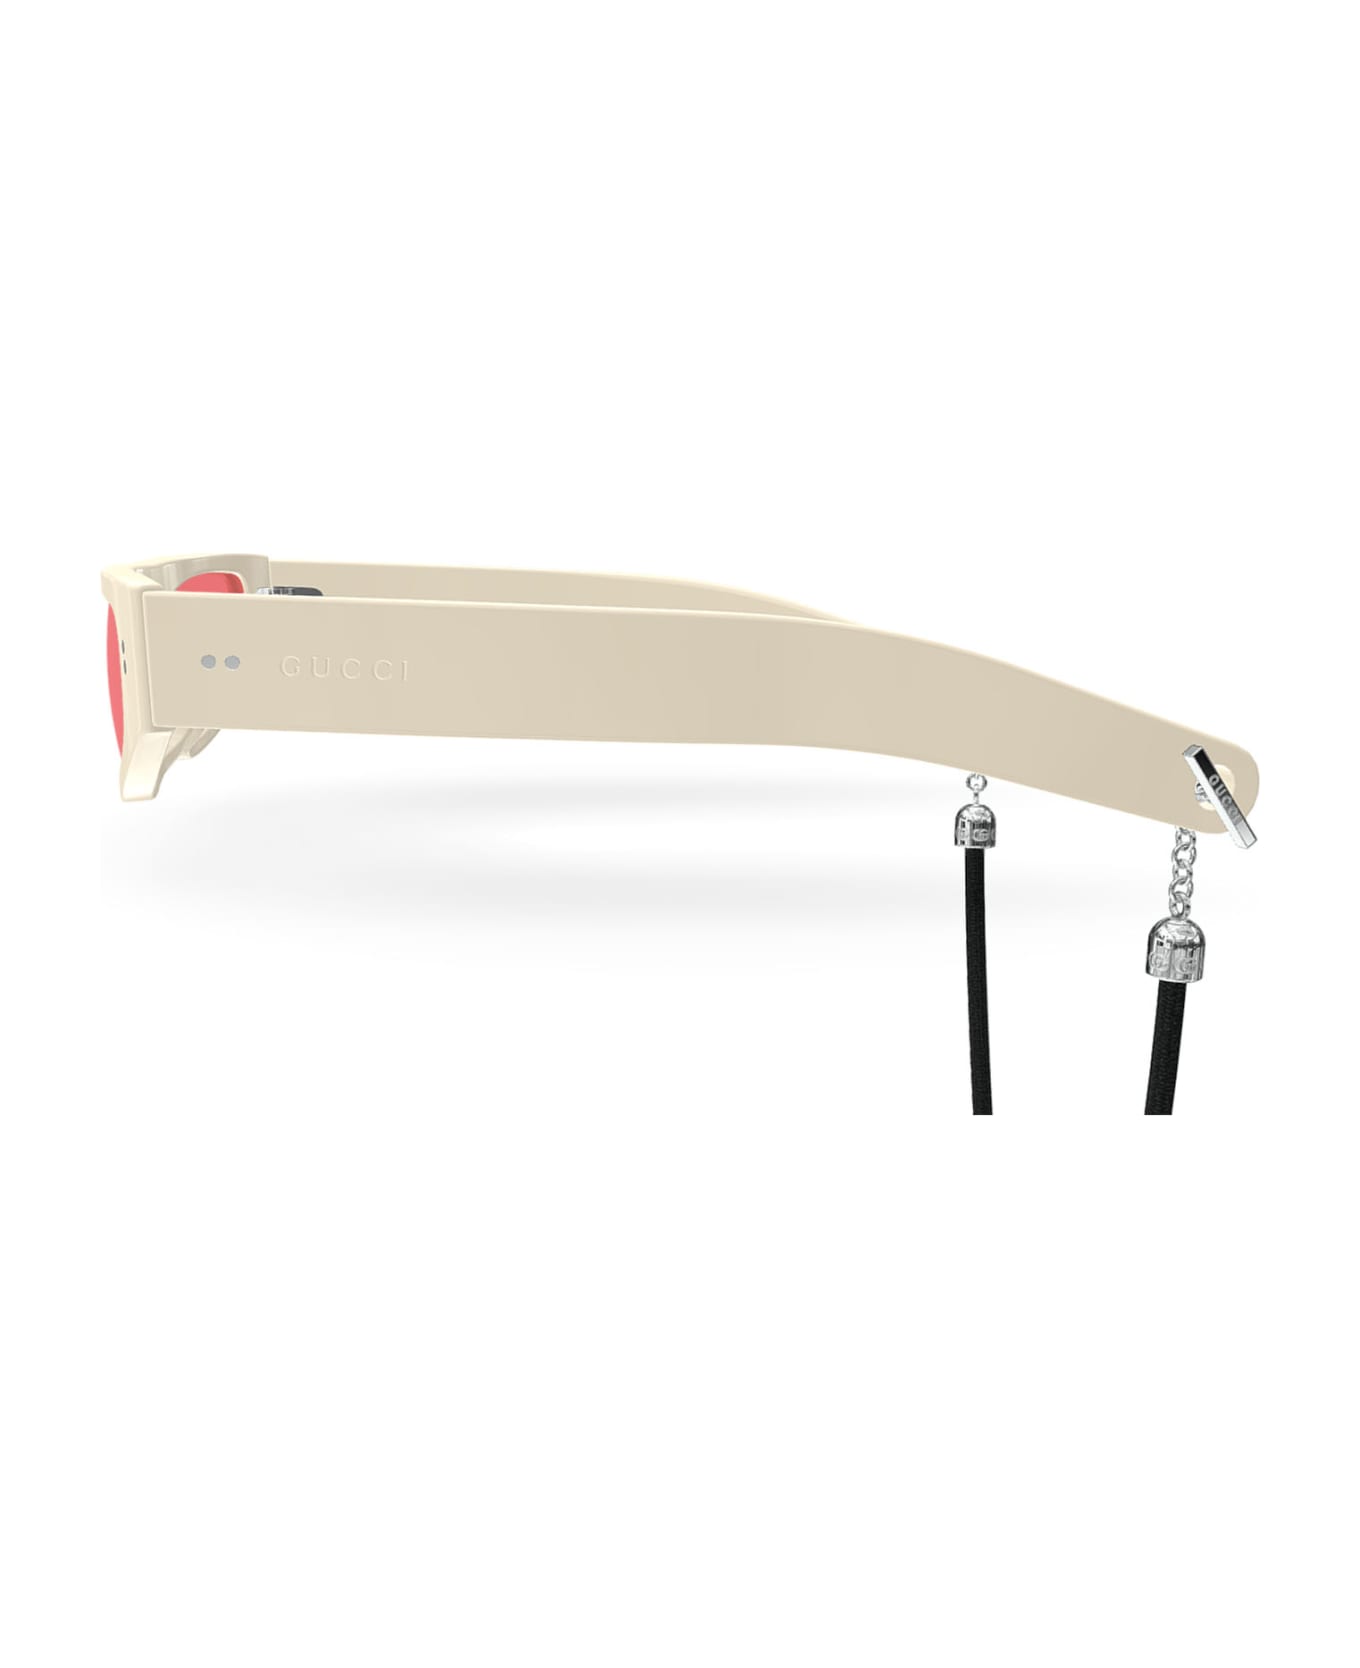 Gucci Eyewear GG1634S Sunglasses - Ivory Ivory Red サングラス